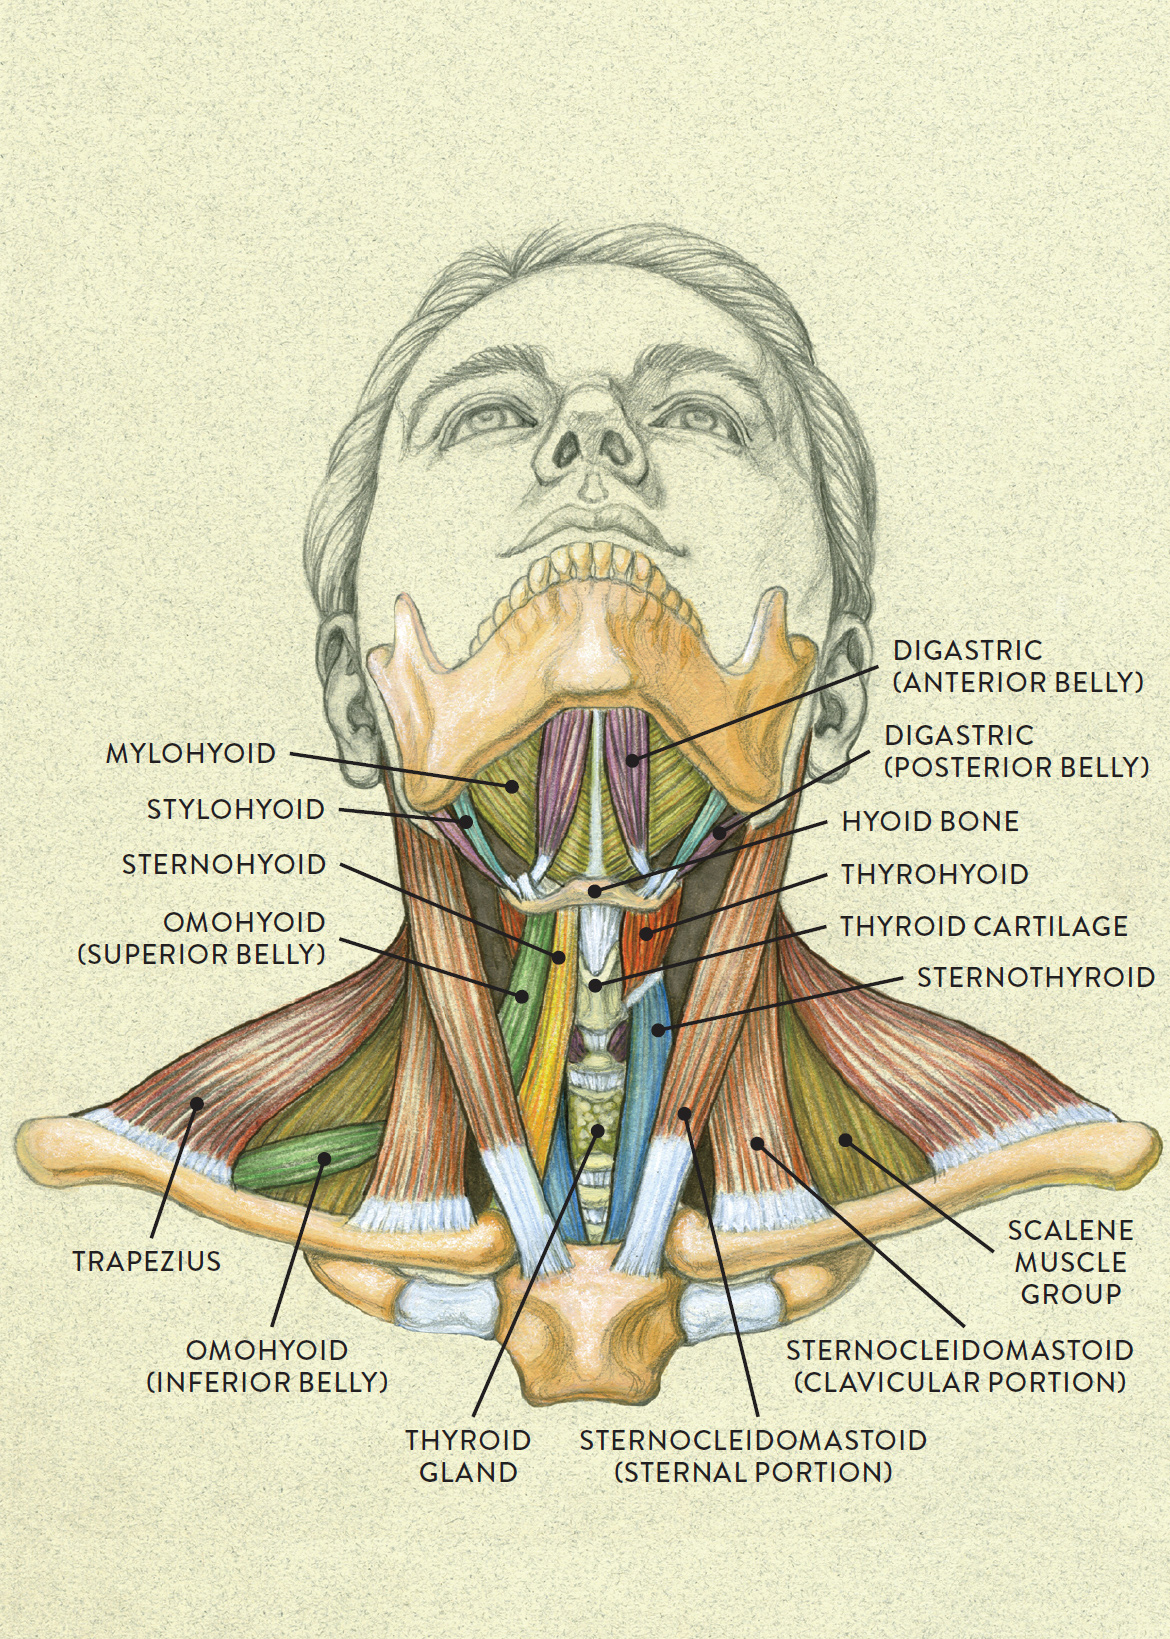 [DIAGRAM] Diagram Of The Anatomy - MYDIAGRAM.ONLINE